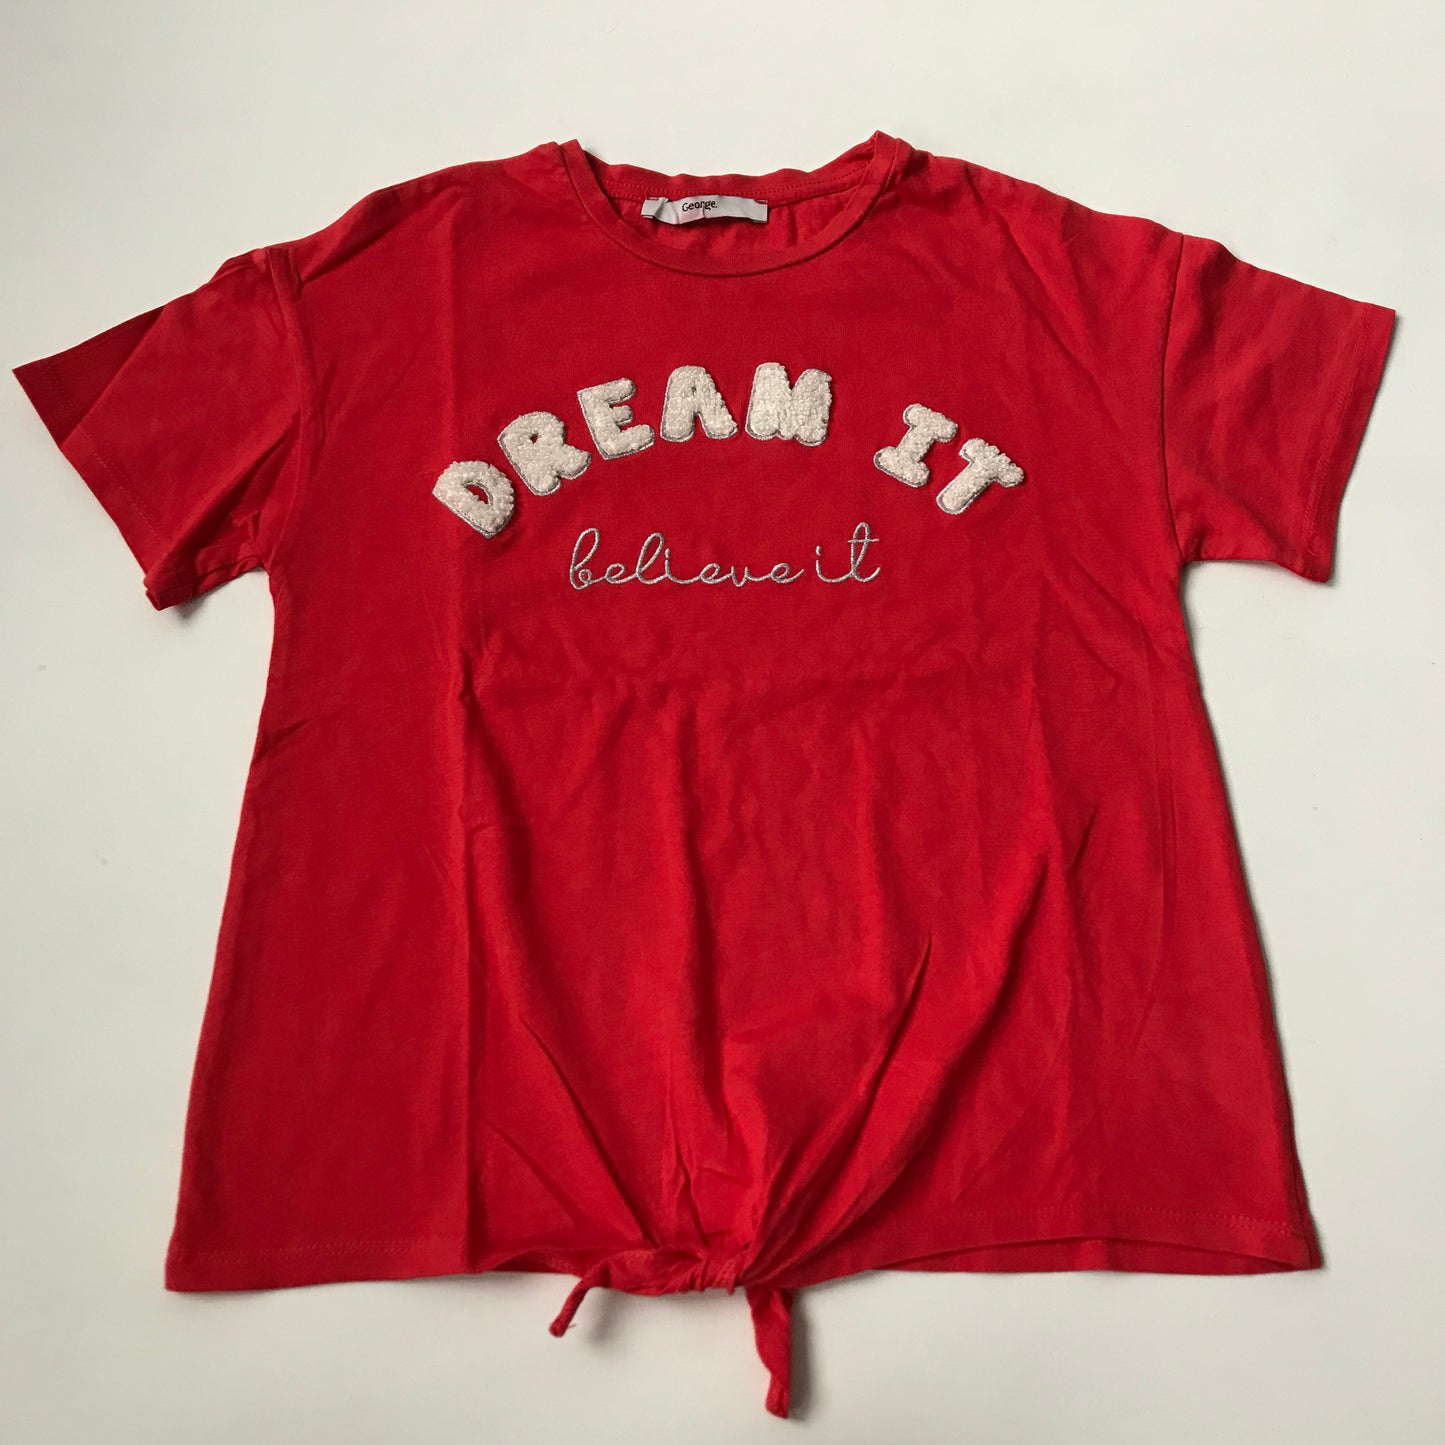 T-shirt - 'Dream It' - Age 9